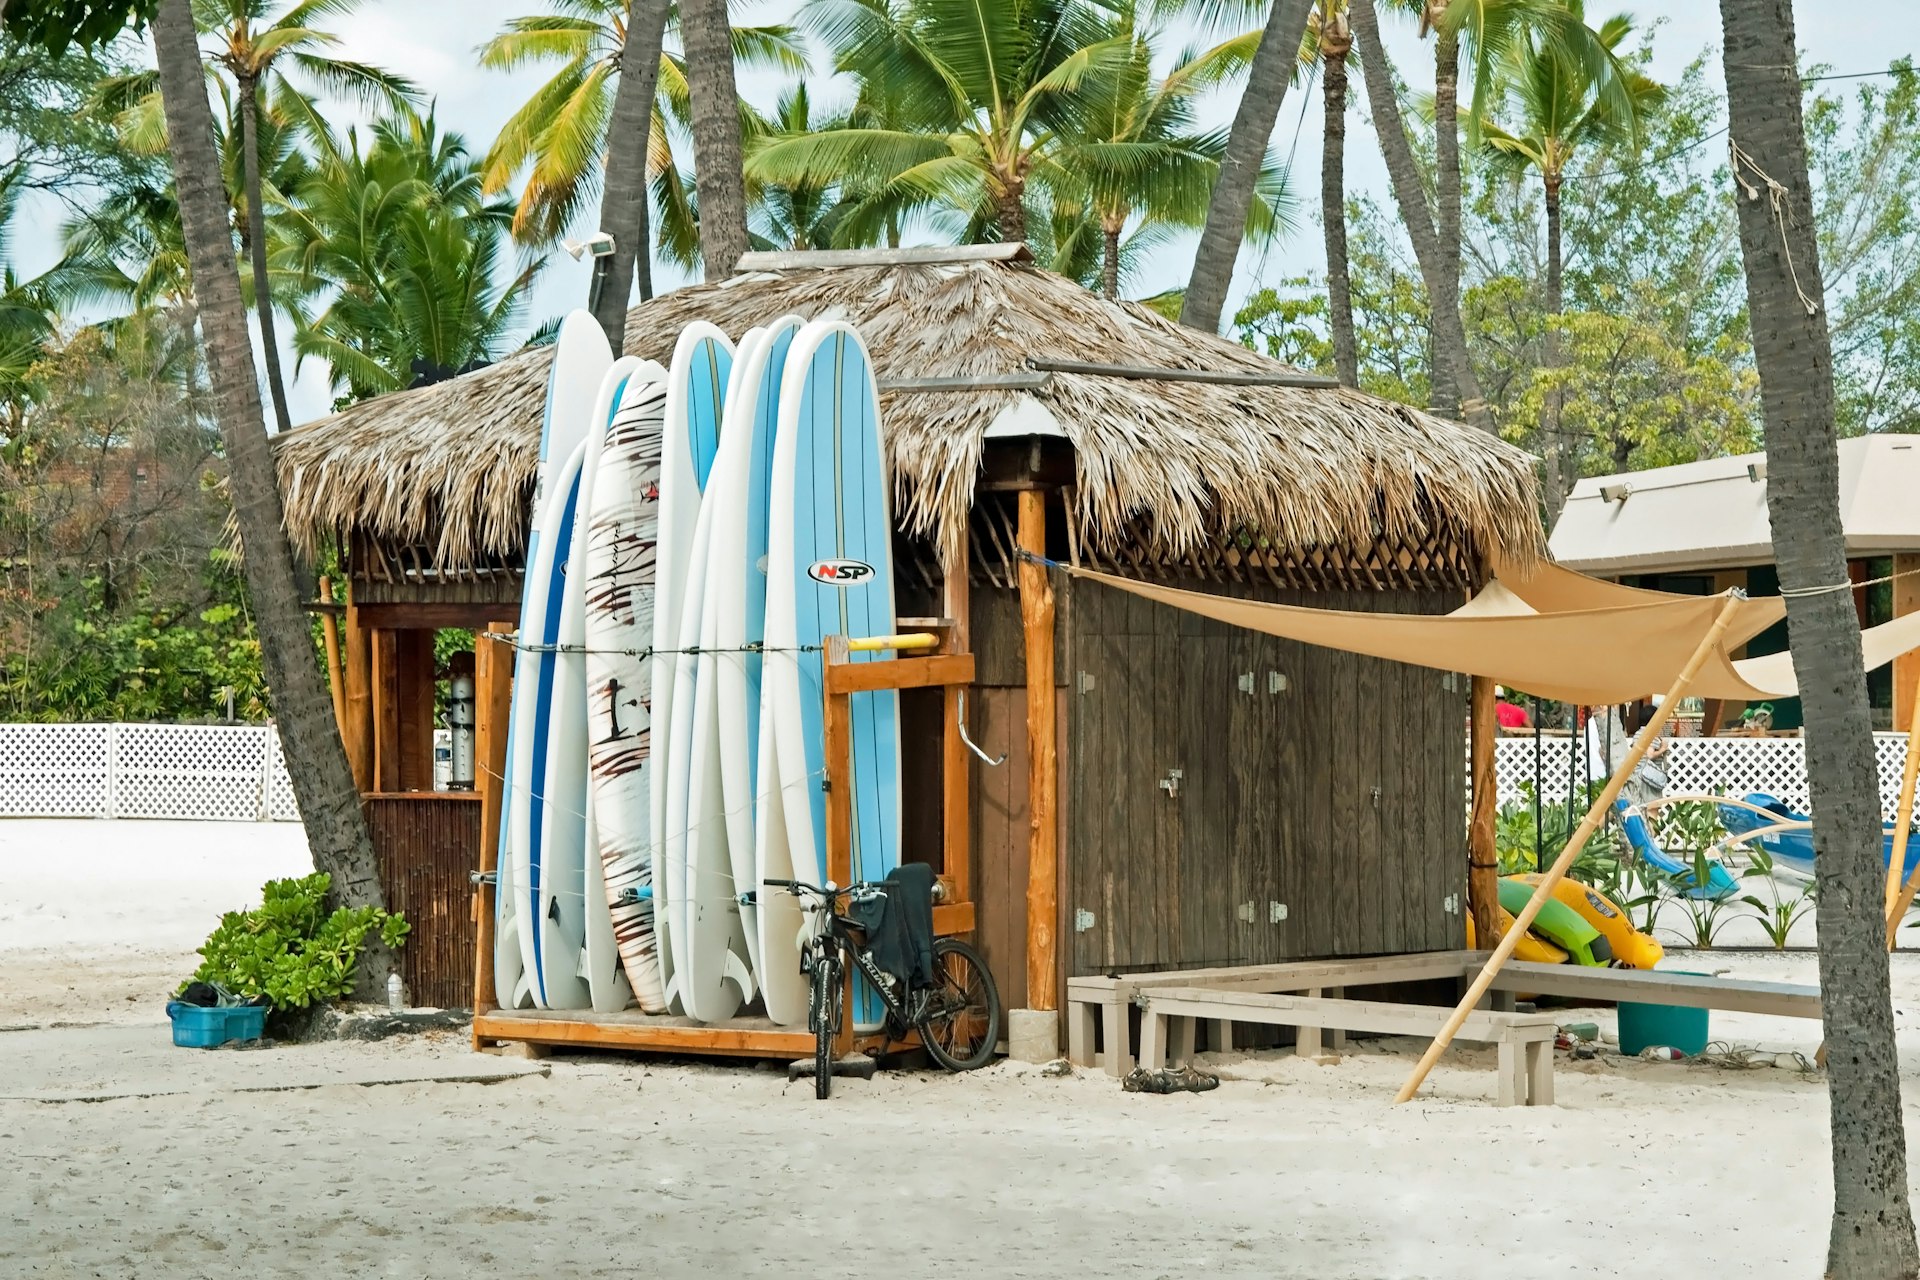 Surf rental shop on Kona beach